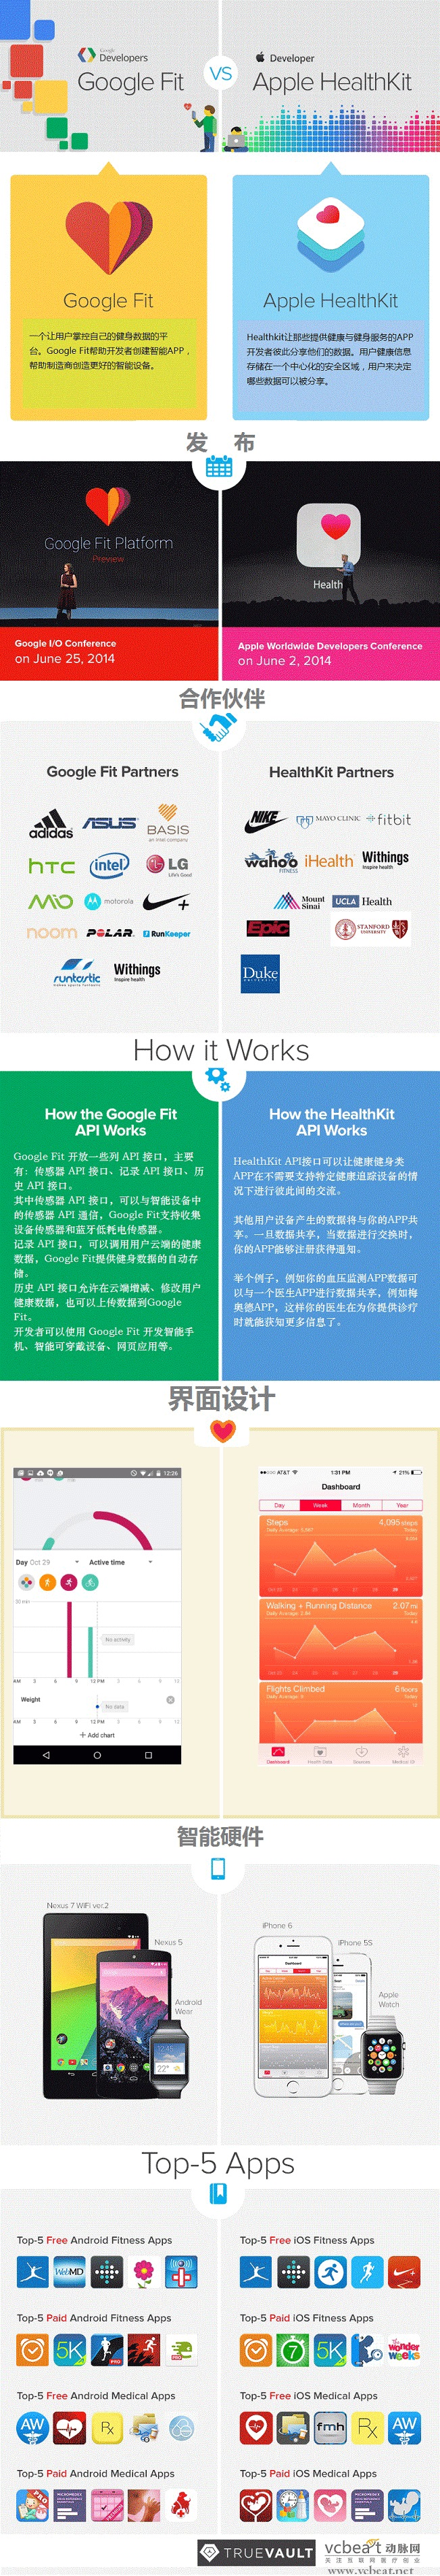 google-fit-vs-apple-healthkit-ss